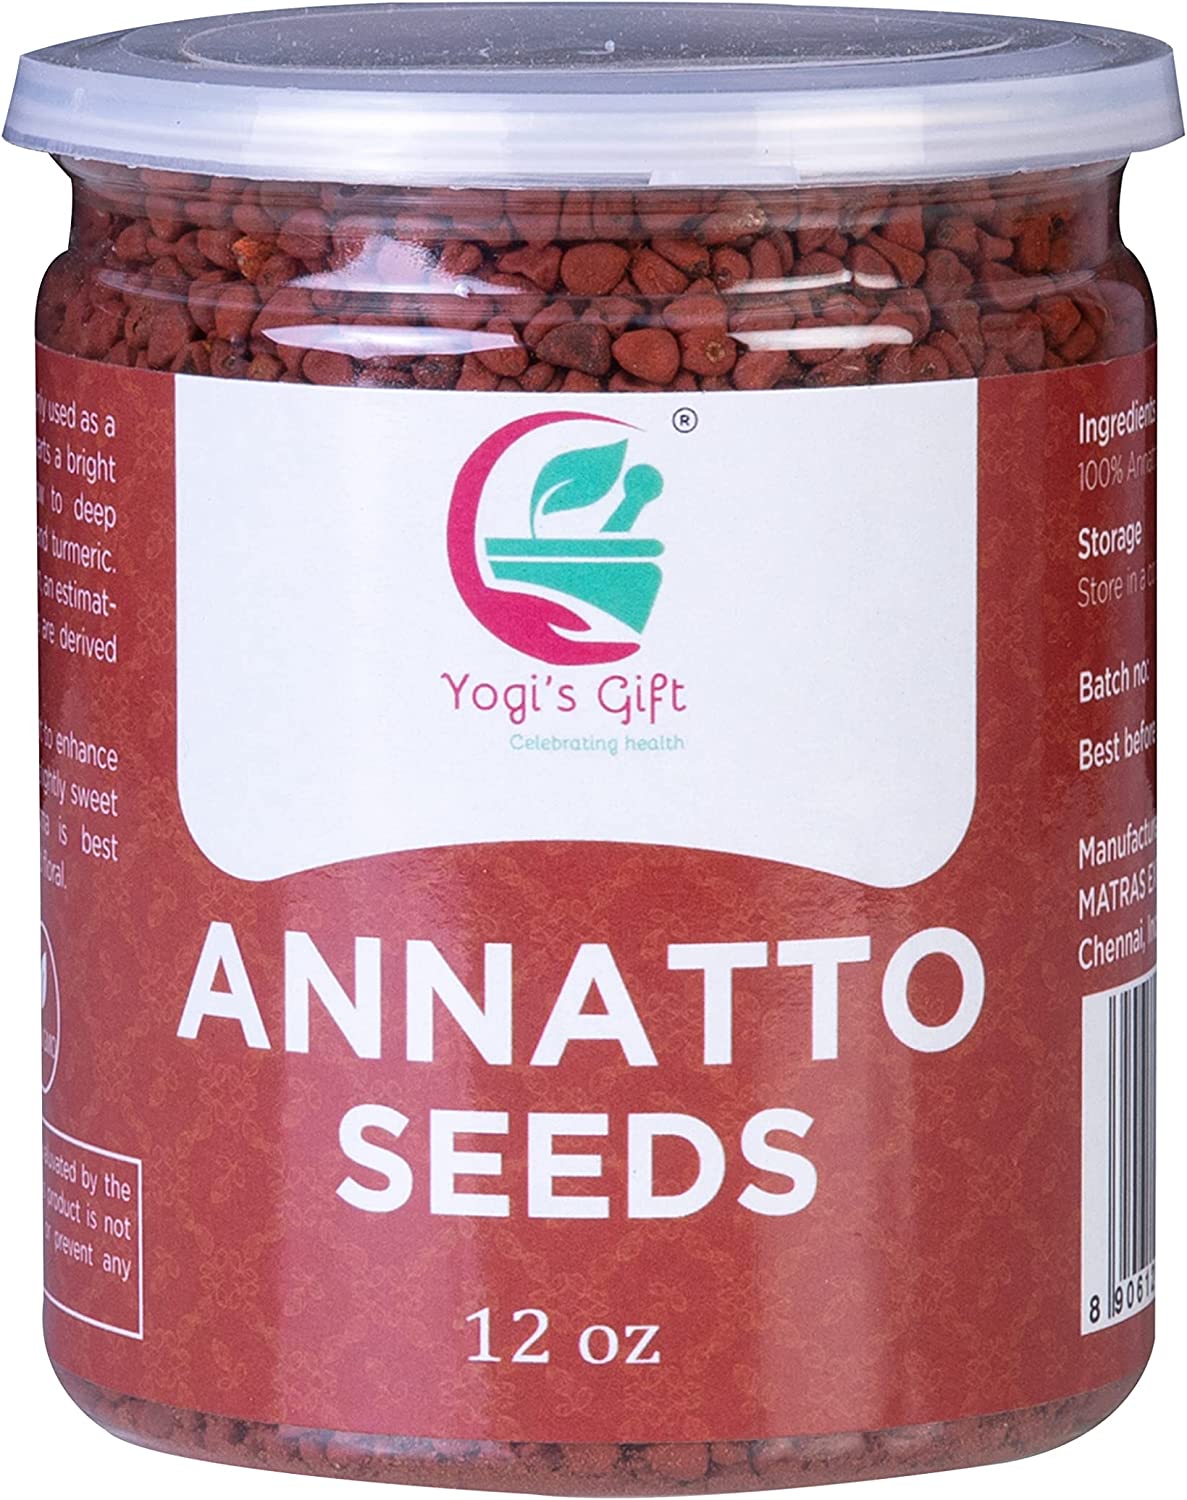 Annatto Seeds 12oz | 100% Pure and Natural | Bixa Orellana / Achiote / semillas de Annatto for Seasoning & rubs by Yogi's Gift®